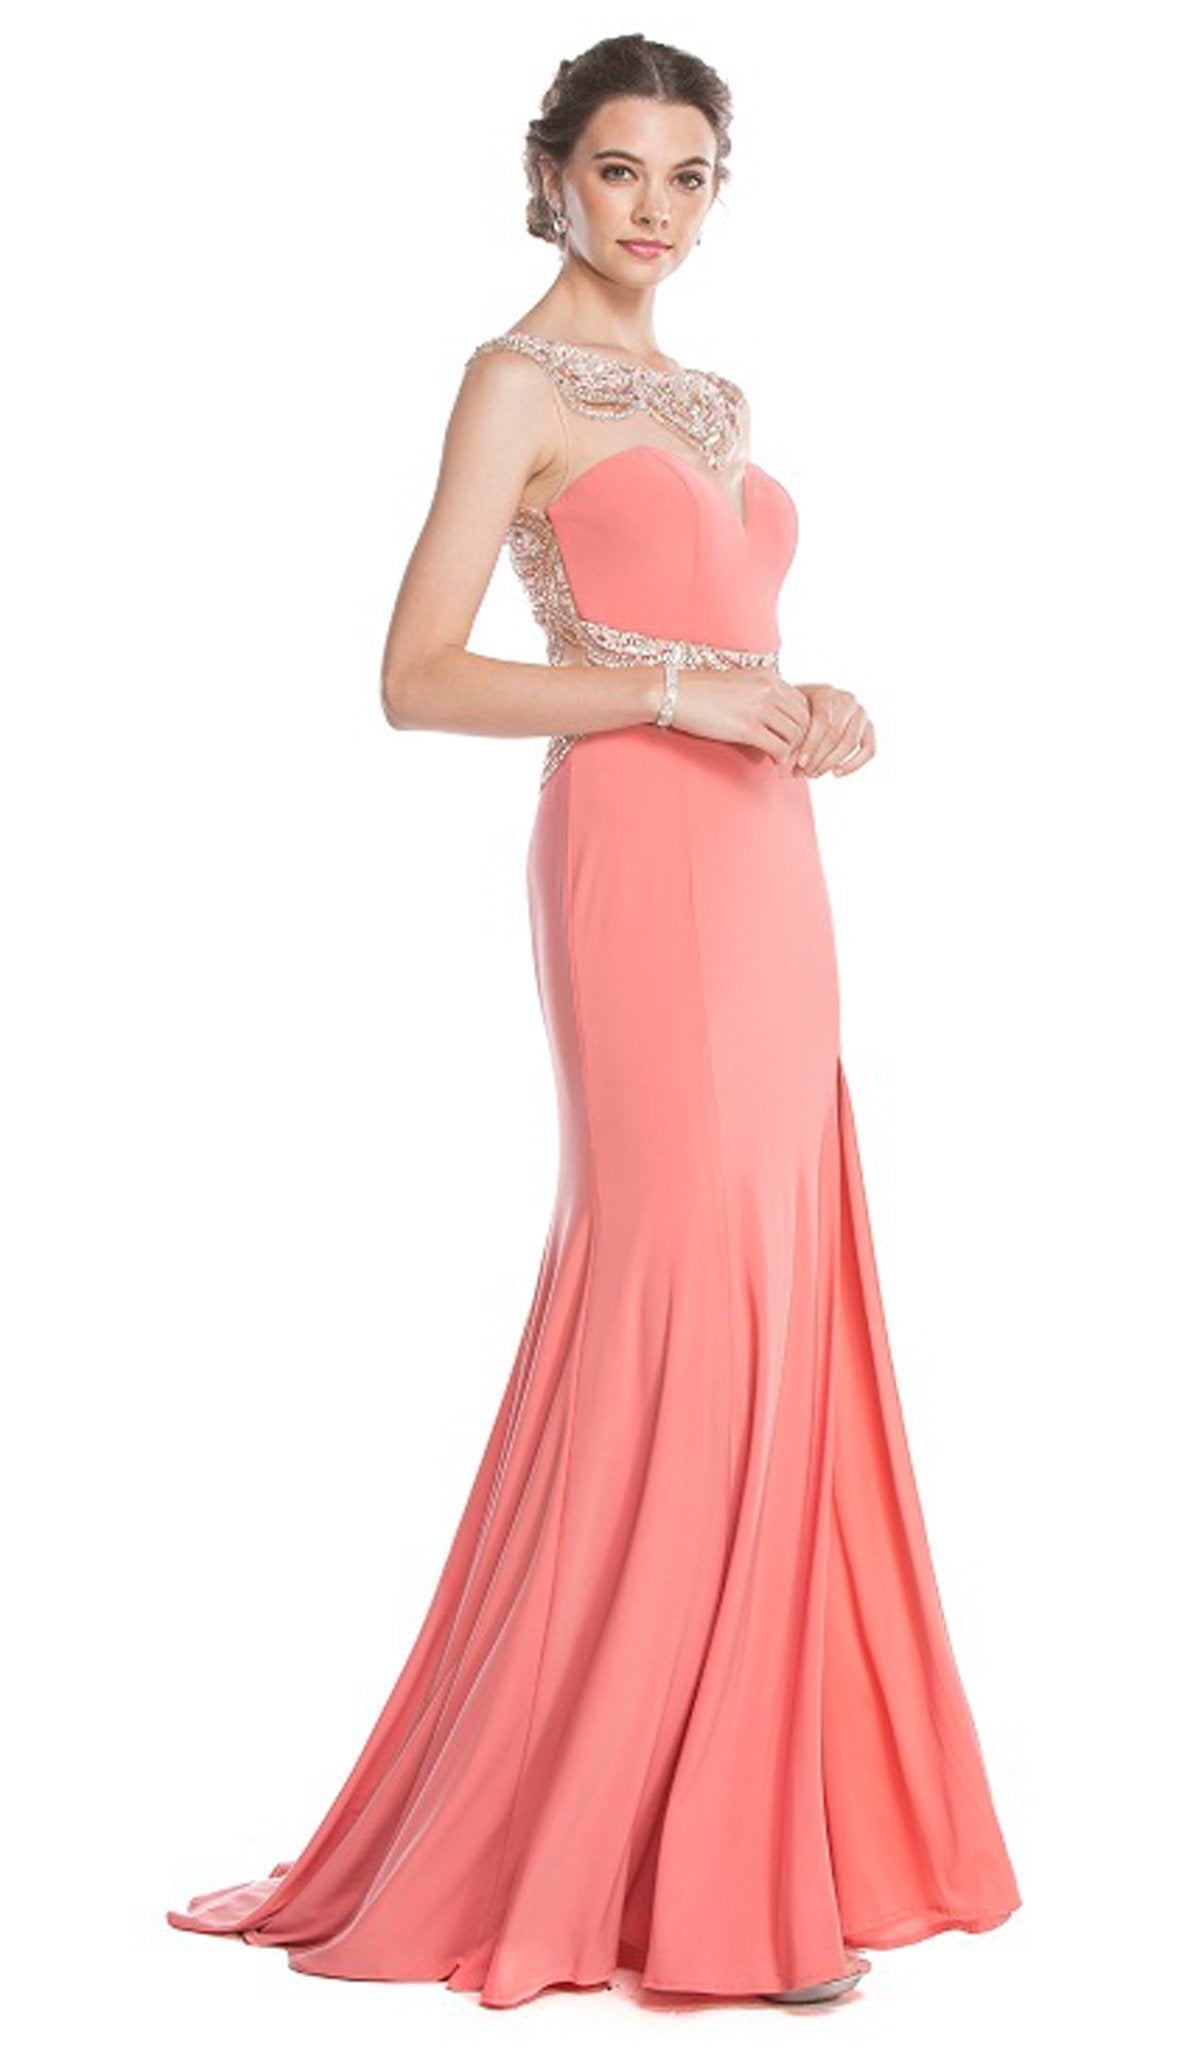 Aspeed Design - Embellished Illusion Bateau Fitted Prom Dress
